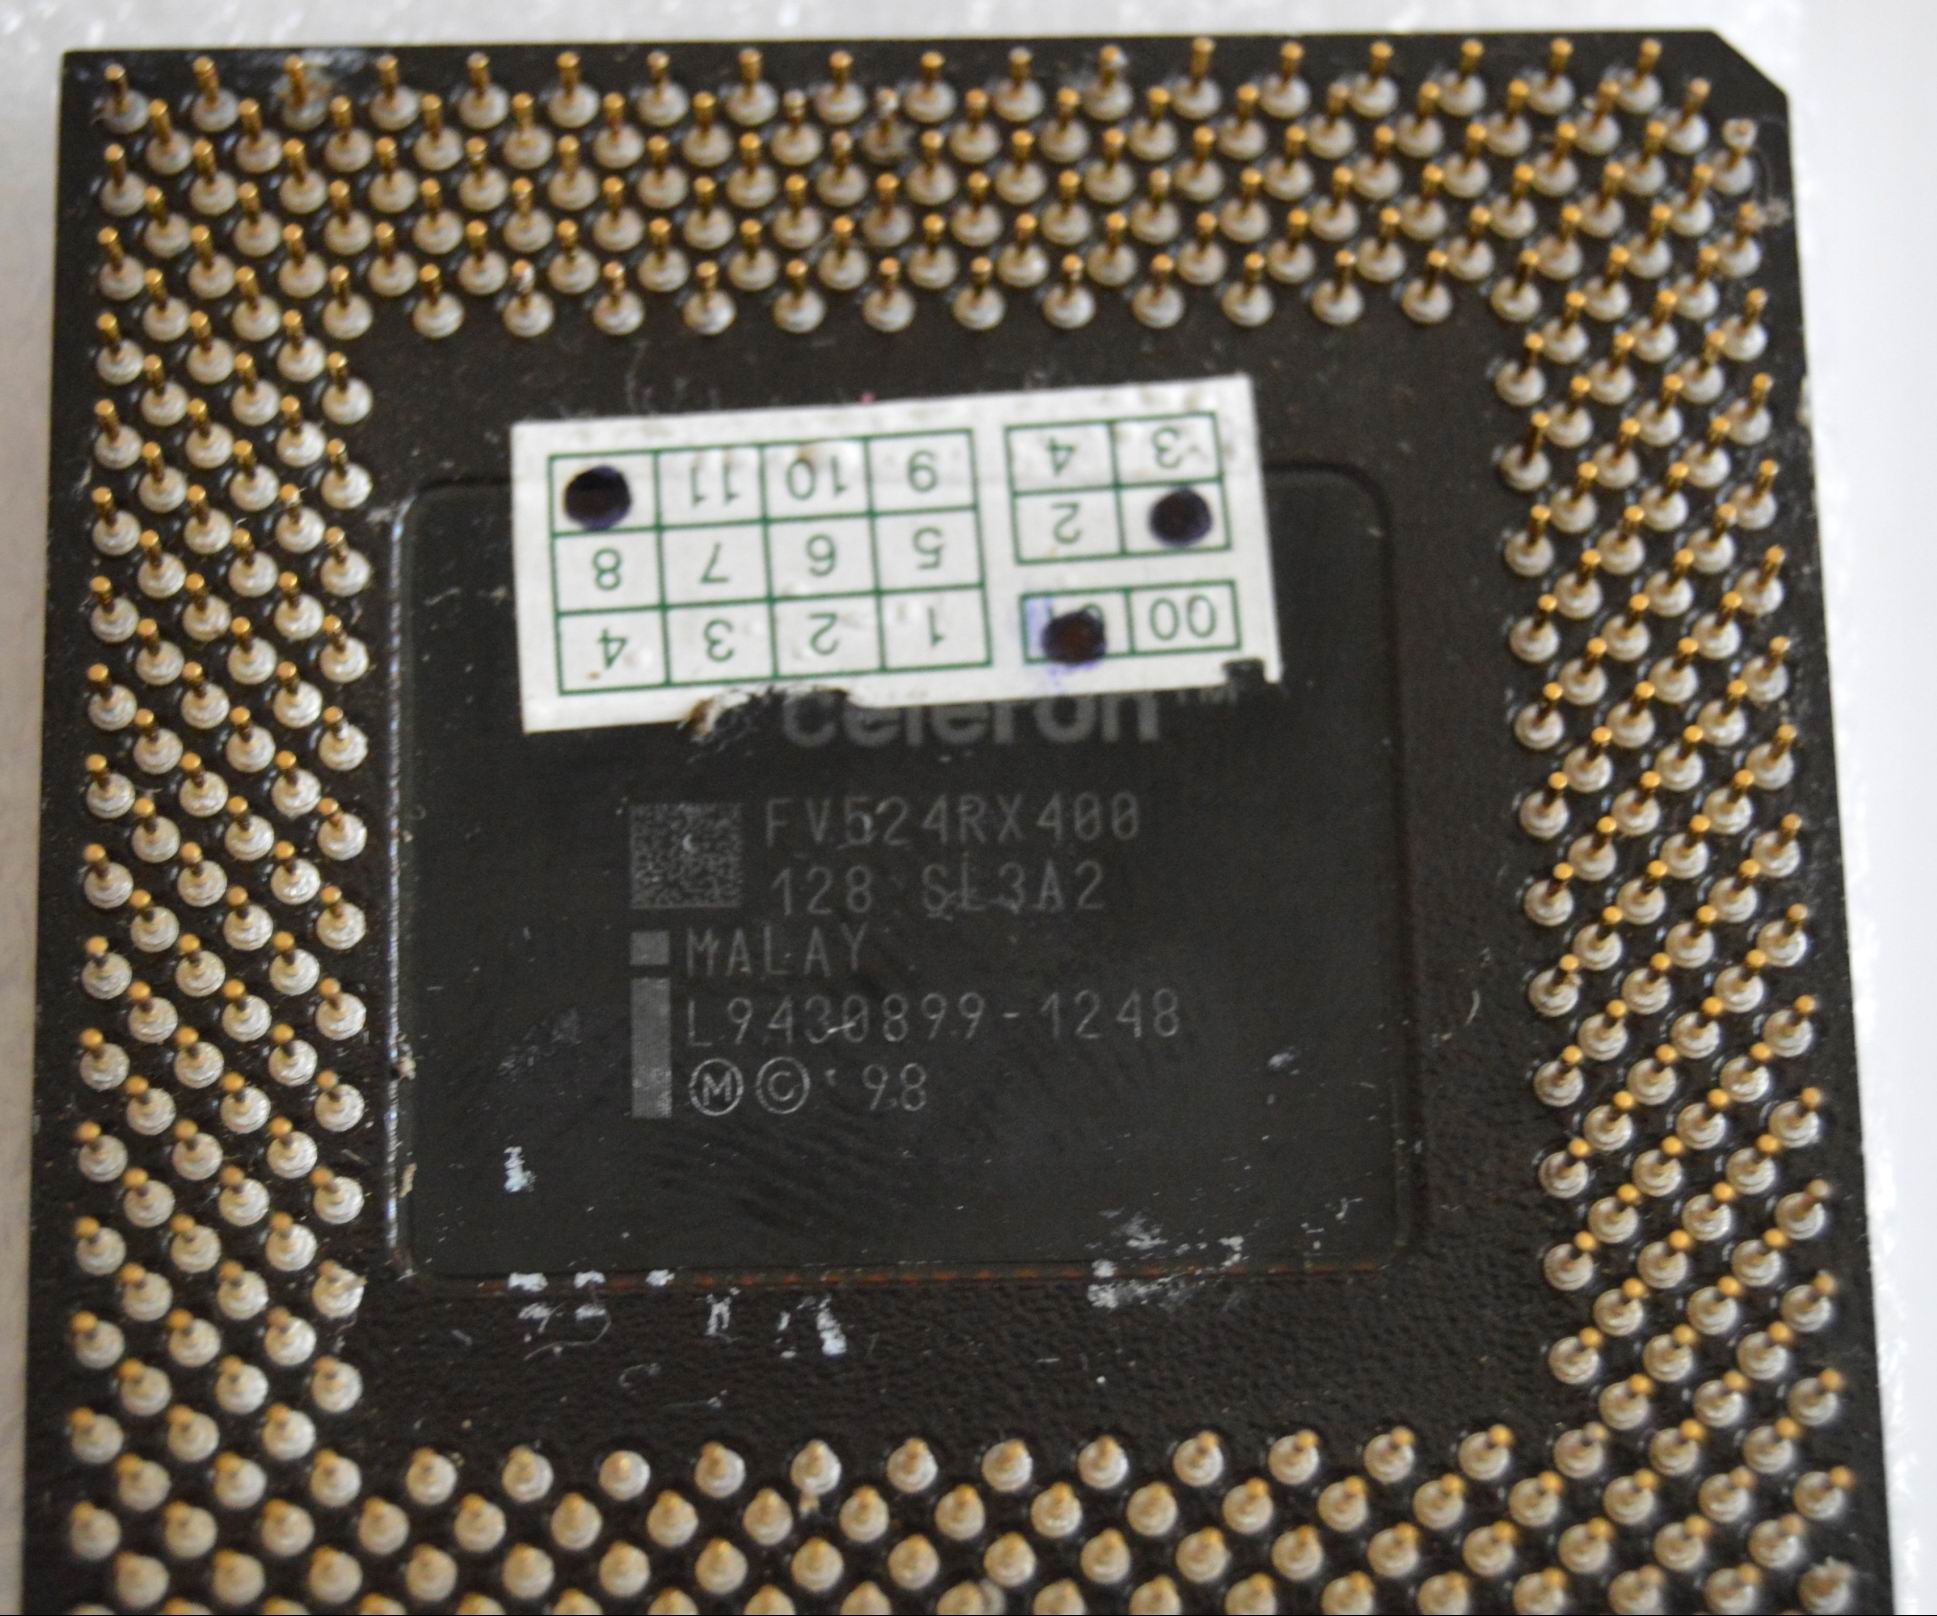 Intel-Celeron-FV524RX400-SL3A2-400MHz_003.jpg